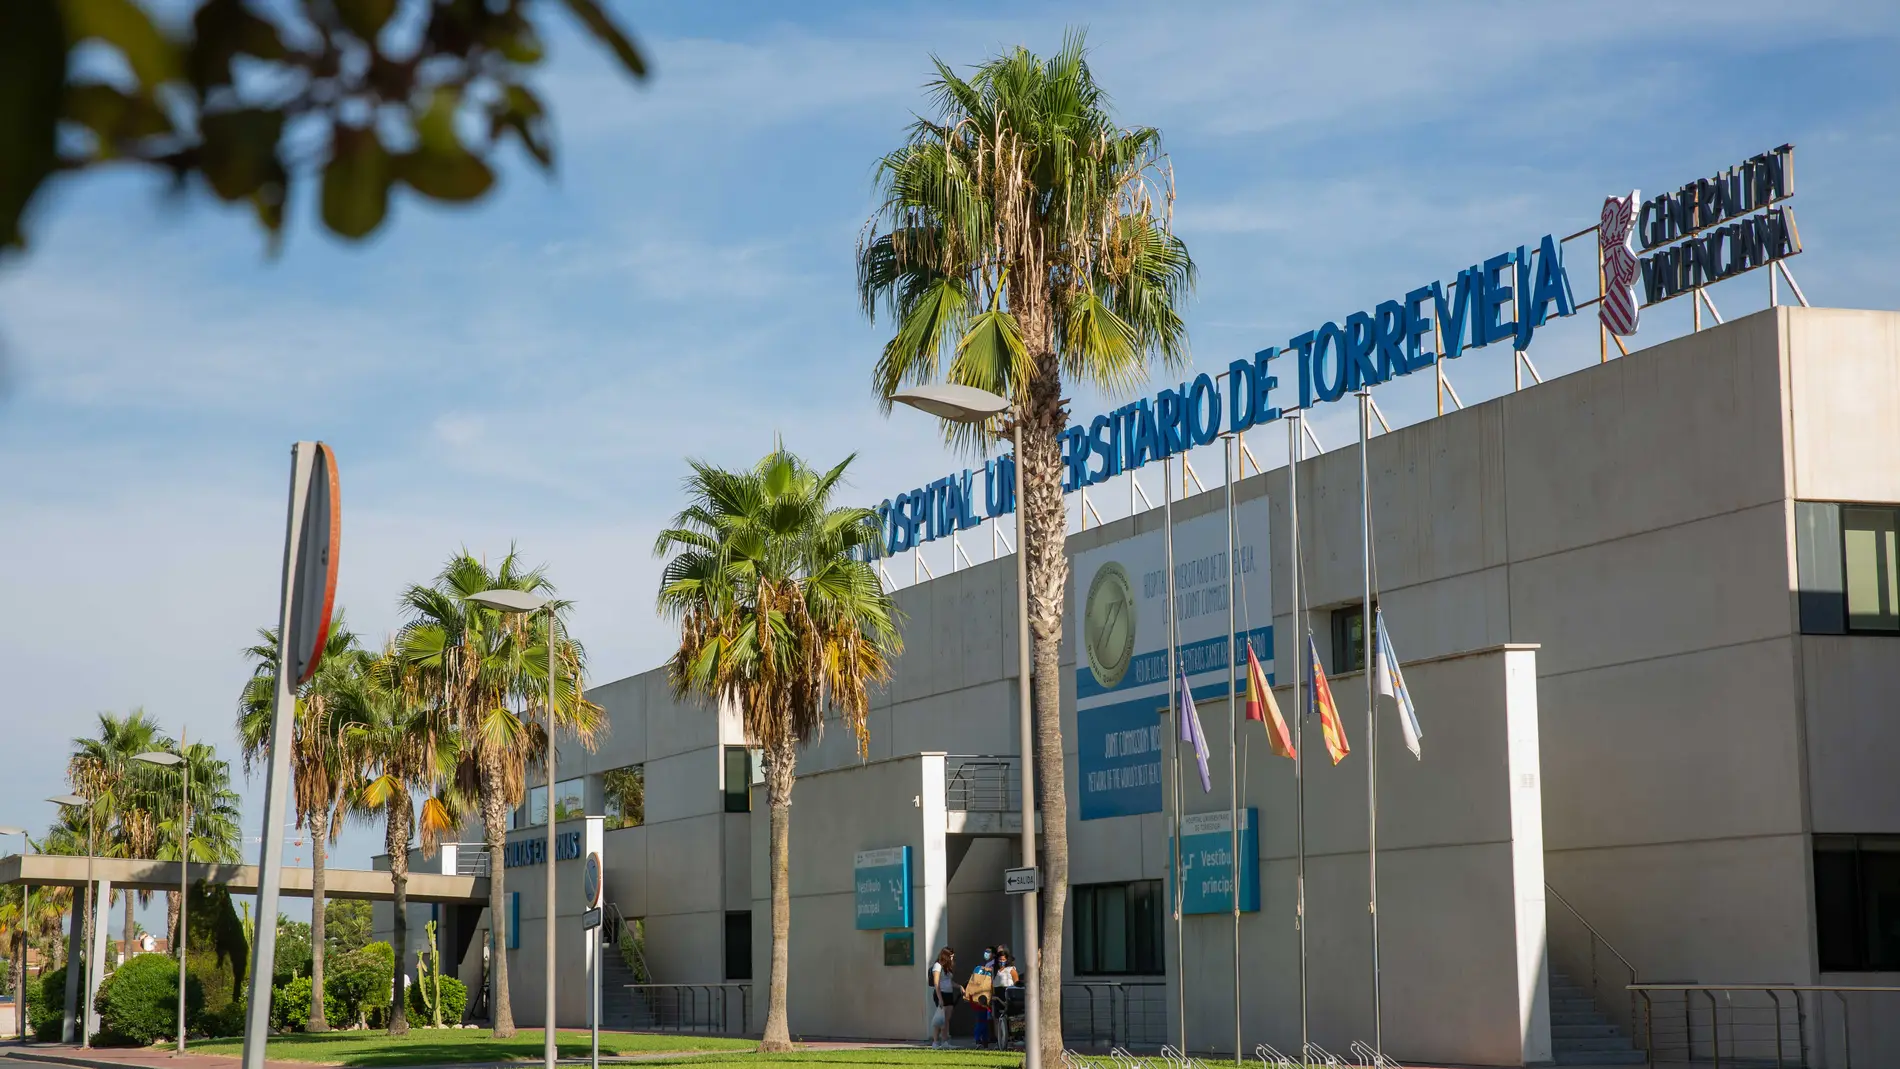 Imagen del Hospital Universitario de Torrevieja